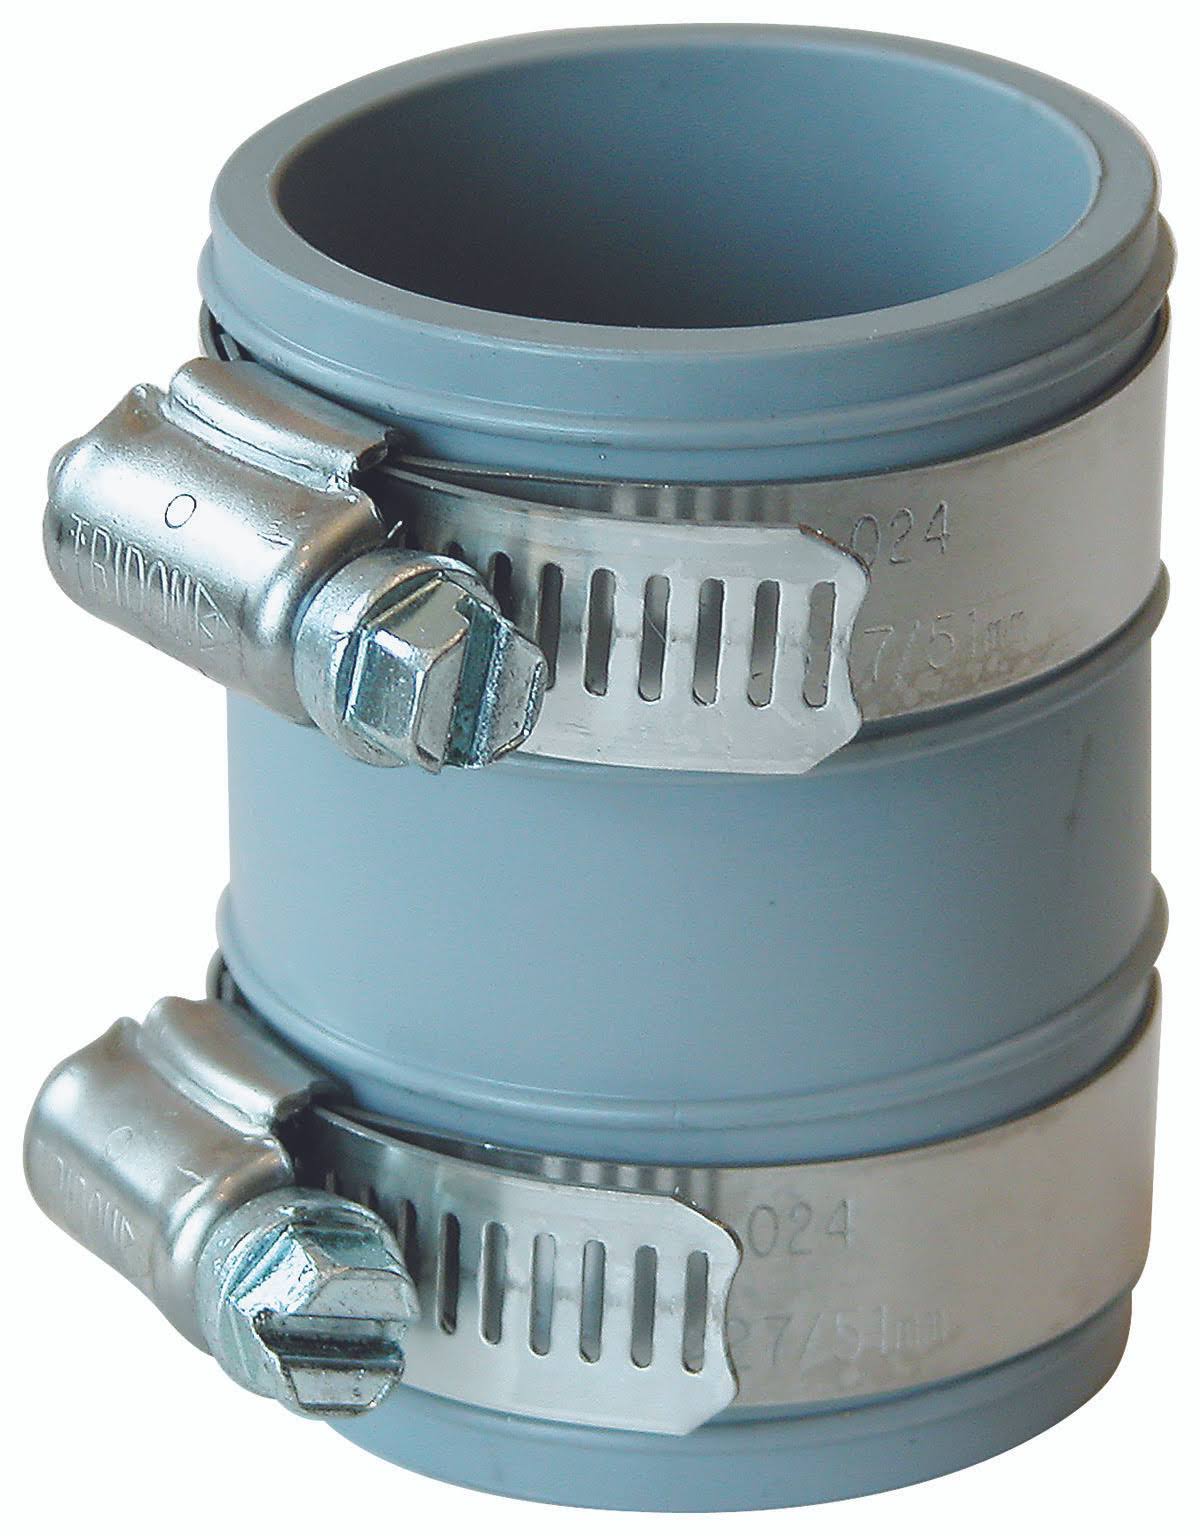 Fernco Tubular Drain Pipe Connector - 1 1/2"